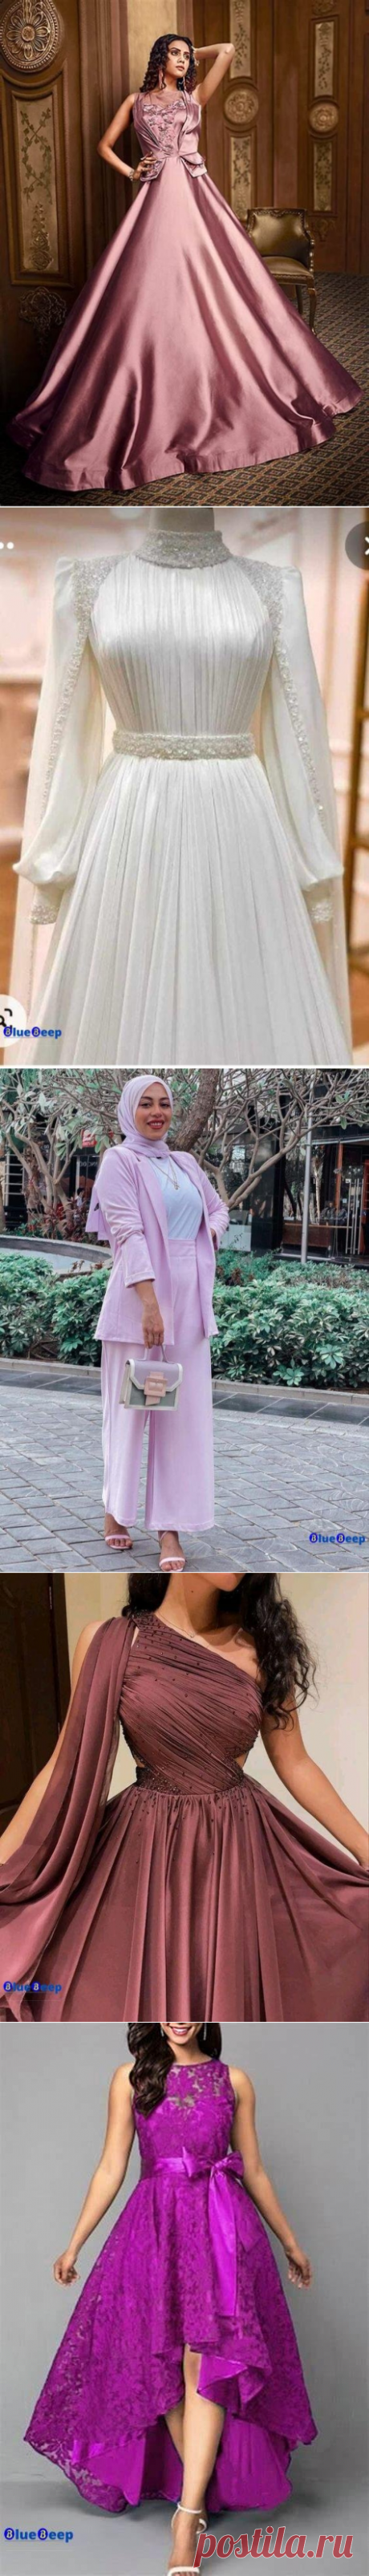 Engagement Dresses Arab Style: Exquisite Designs for Cultural Celebrations